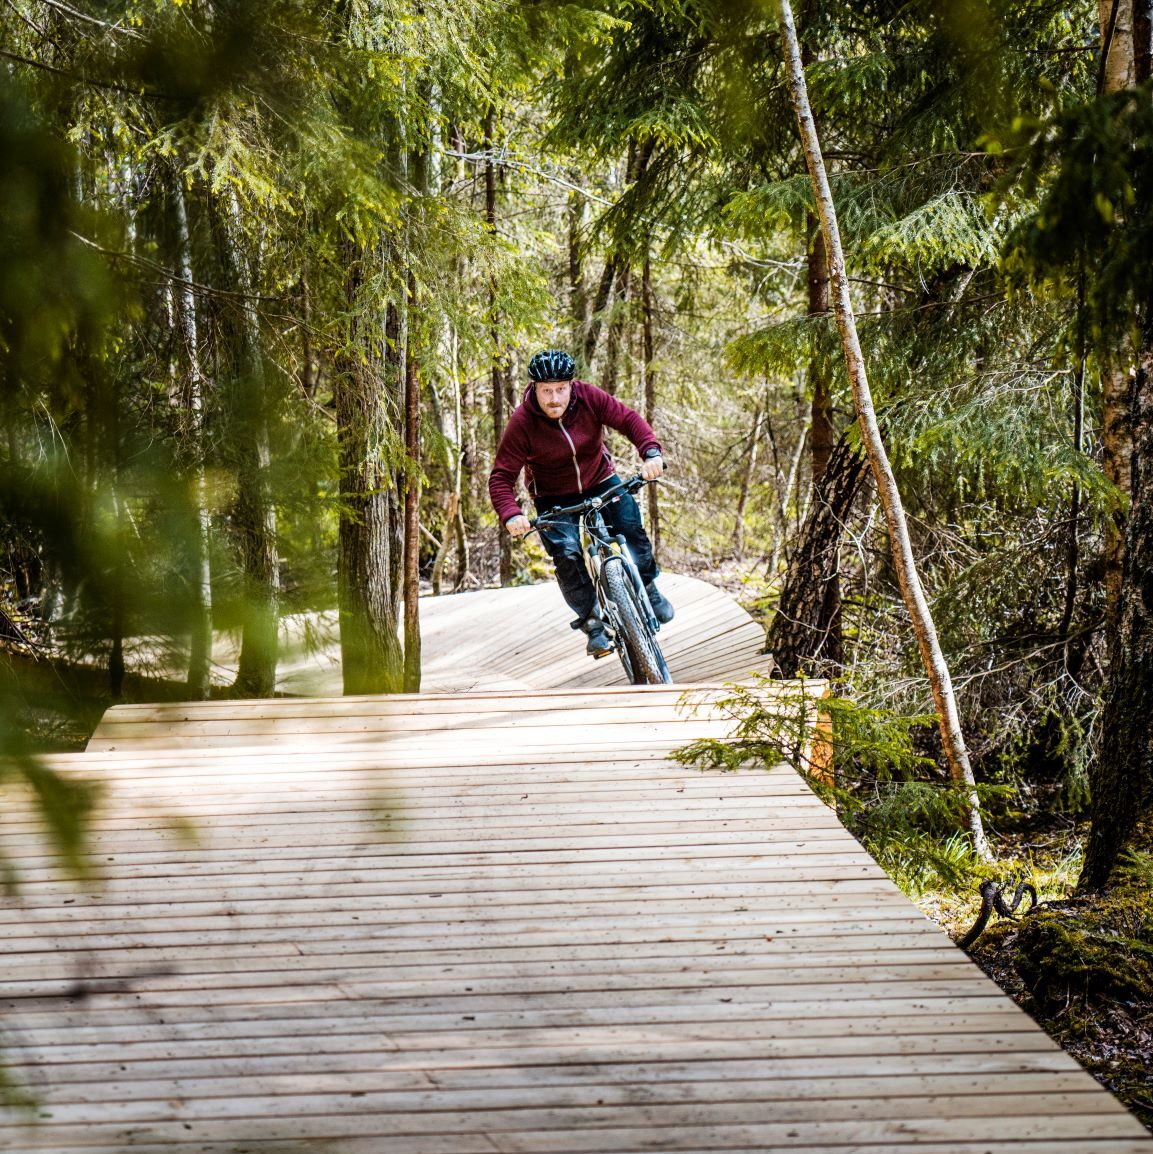 mountainbikecyklist på träbro i skogen